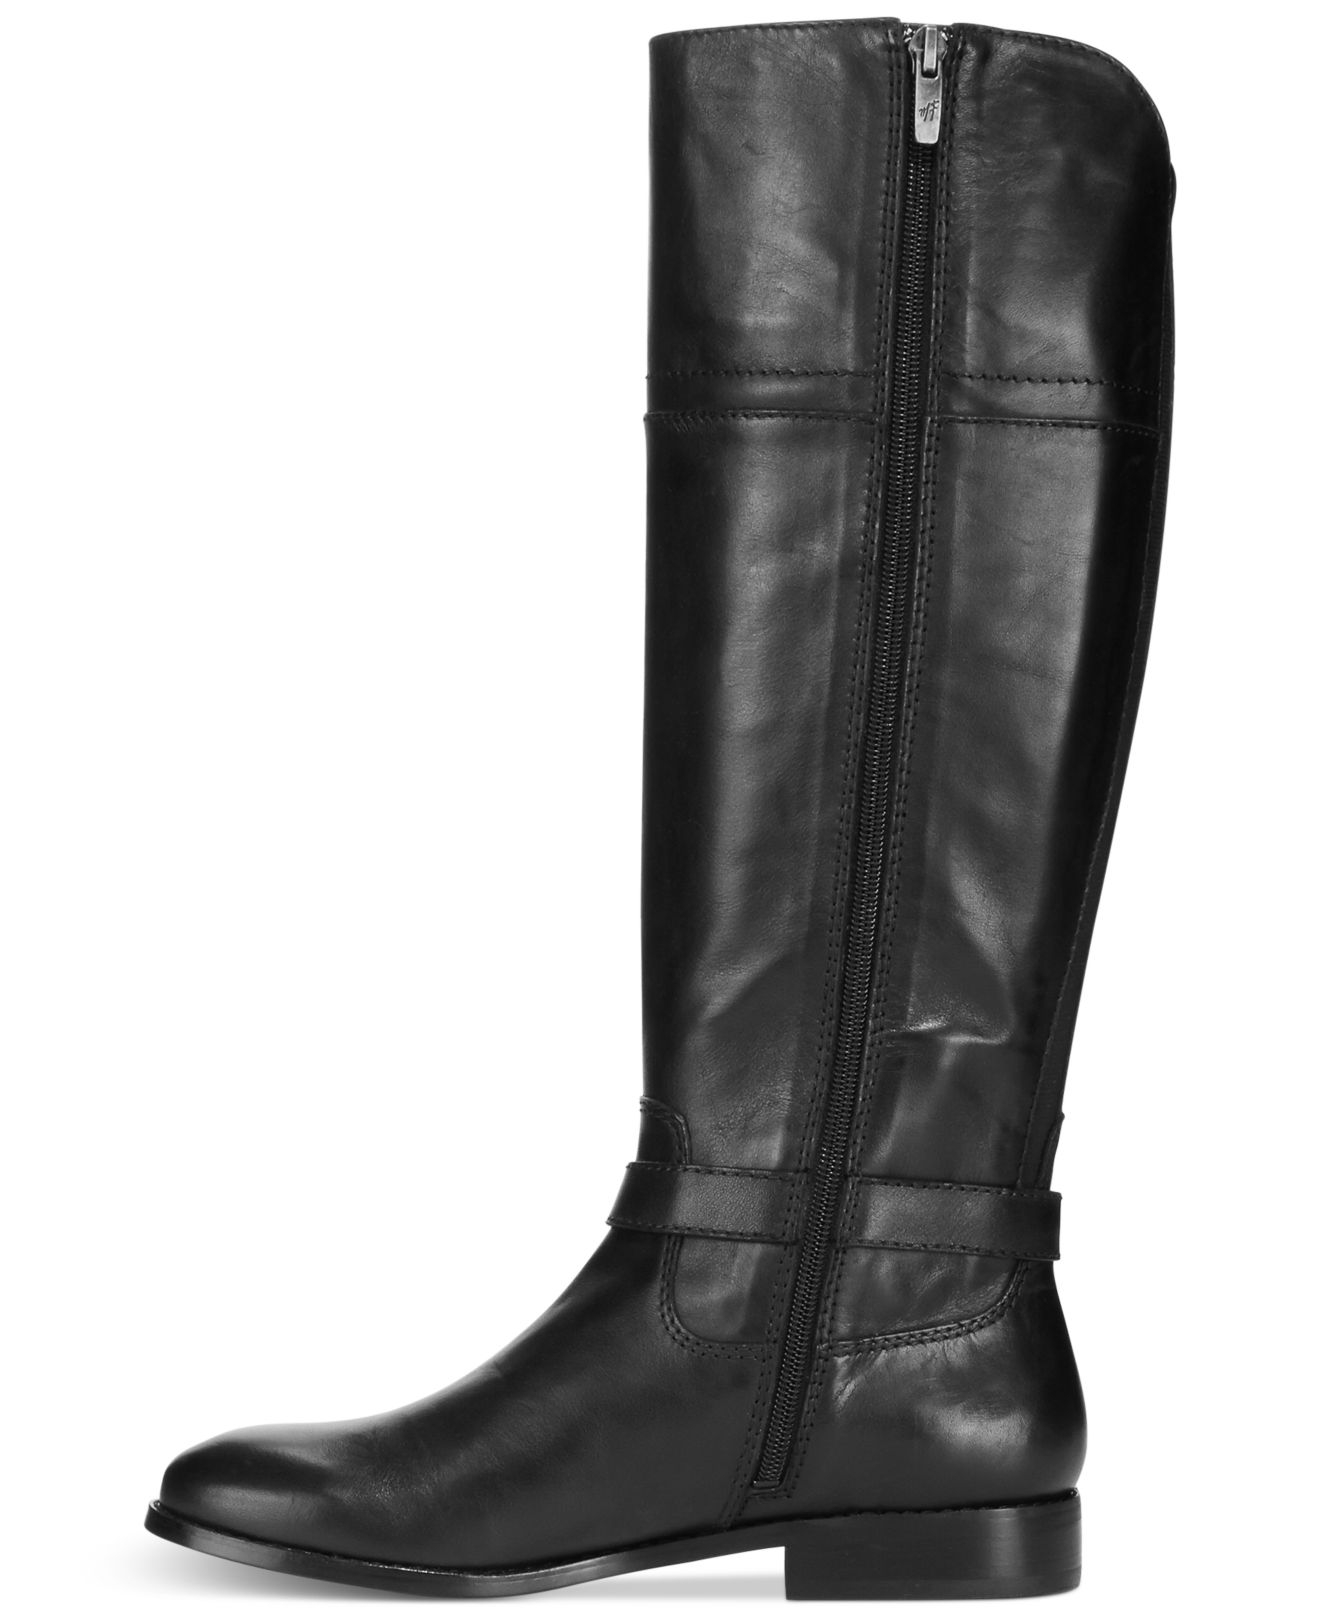 Lyst - Marc Fisher Aysha Tall Riding Boots in Black